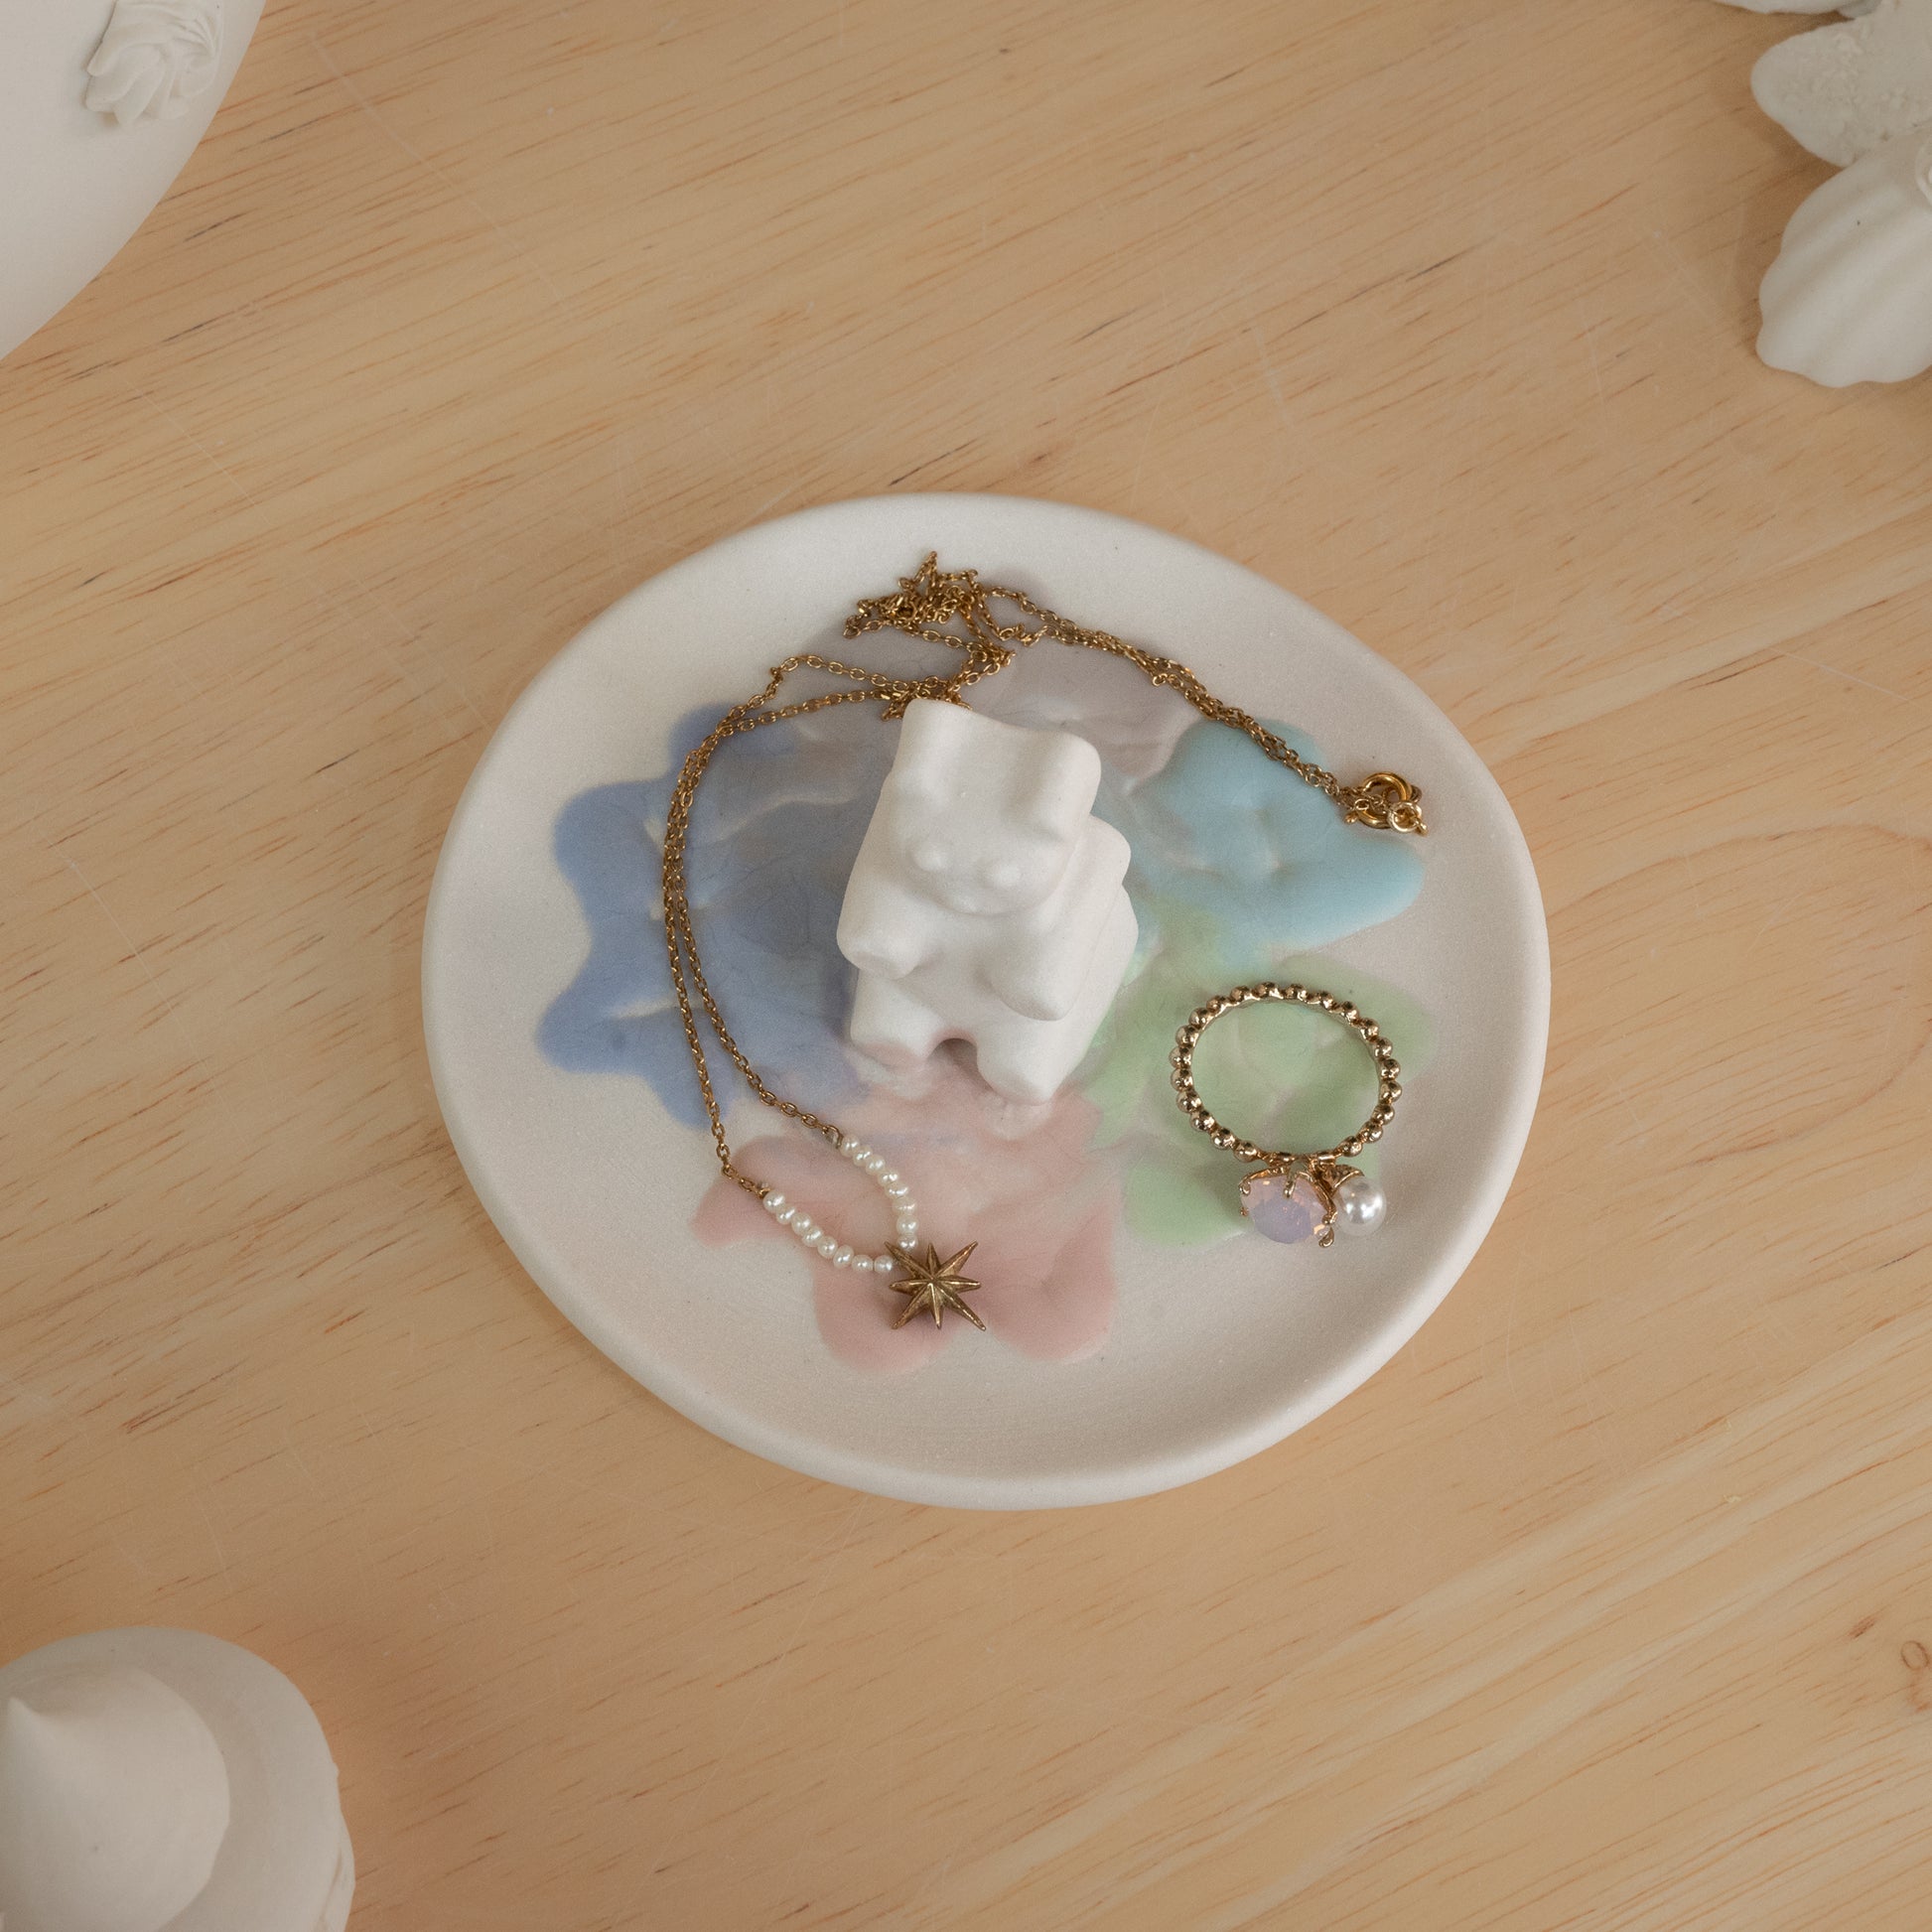 Porcelain ring dish plate gummy bear jewelry holder something blue wedding